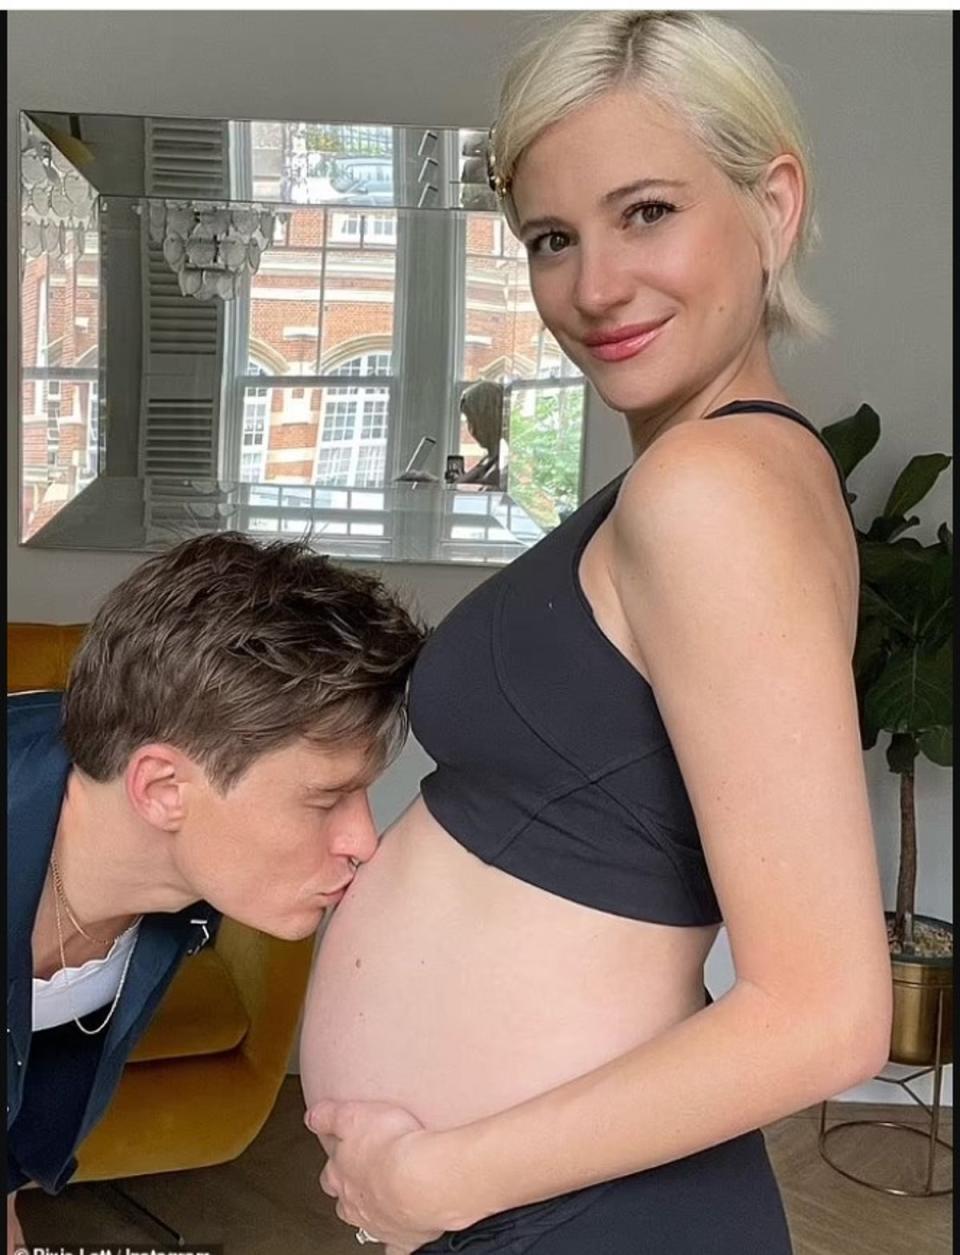 The singer announced her pregnancy in June (Instagram)